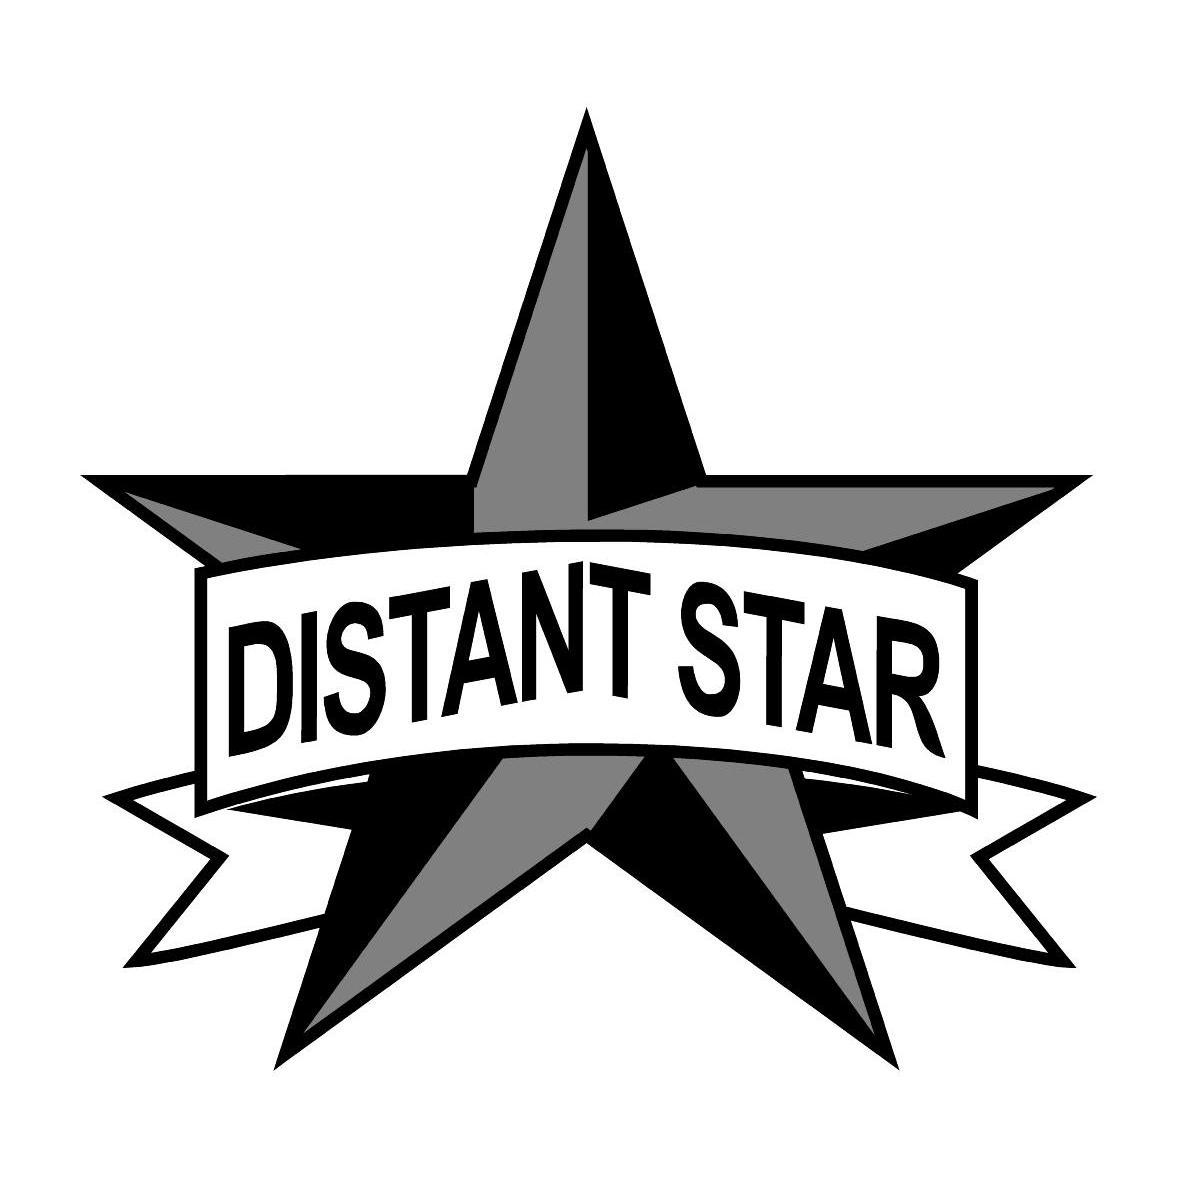 DISTANT STAR